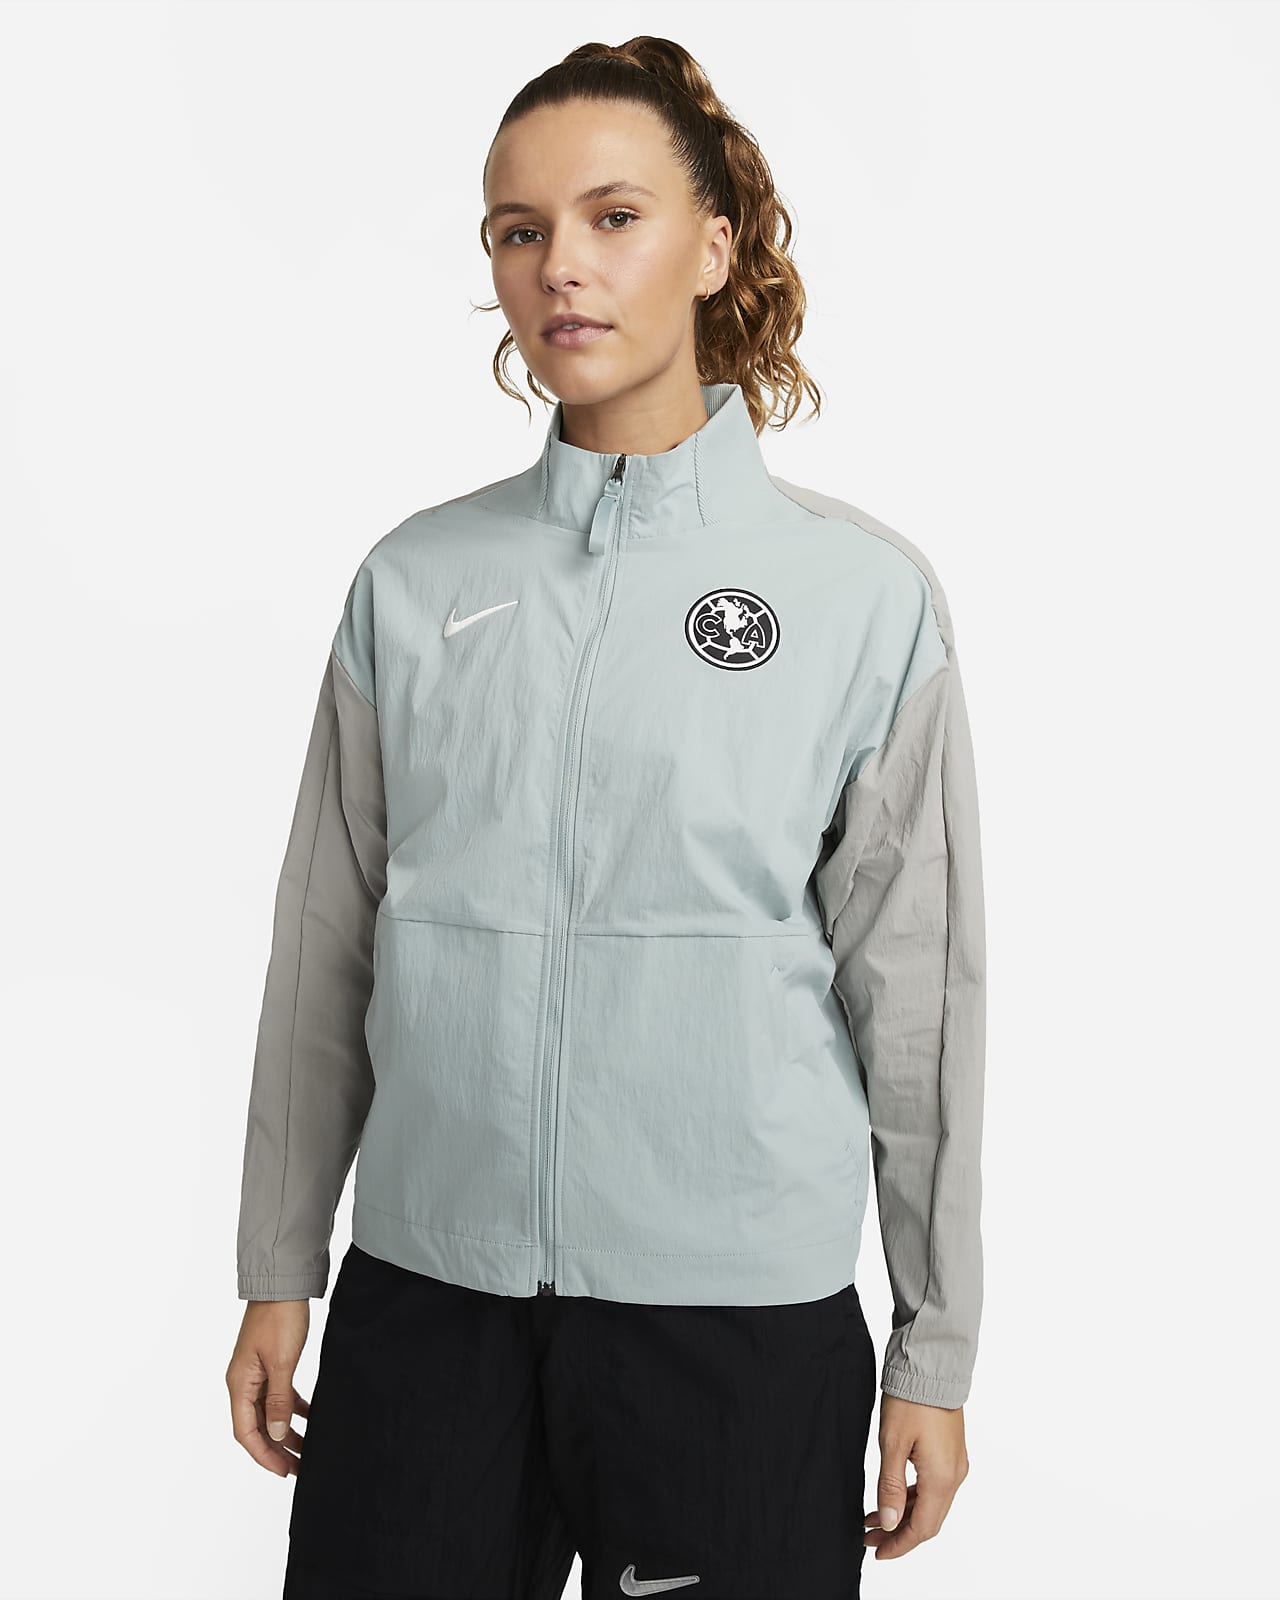 Club America Anthem Women's Nike Dri-FIT Soccer Full-Zip Jacket